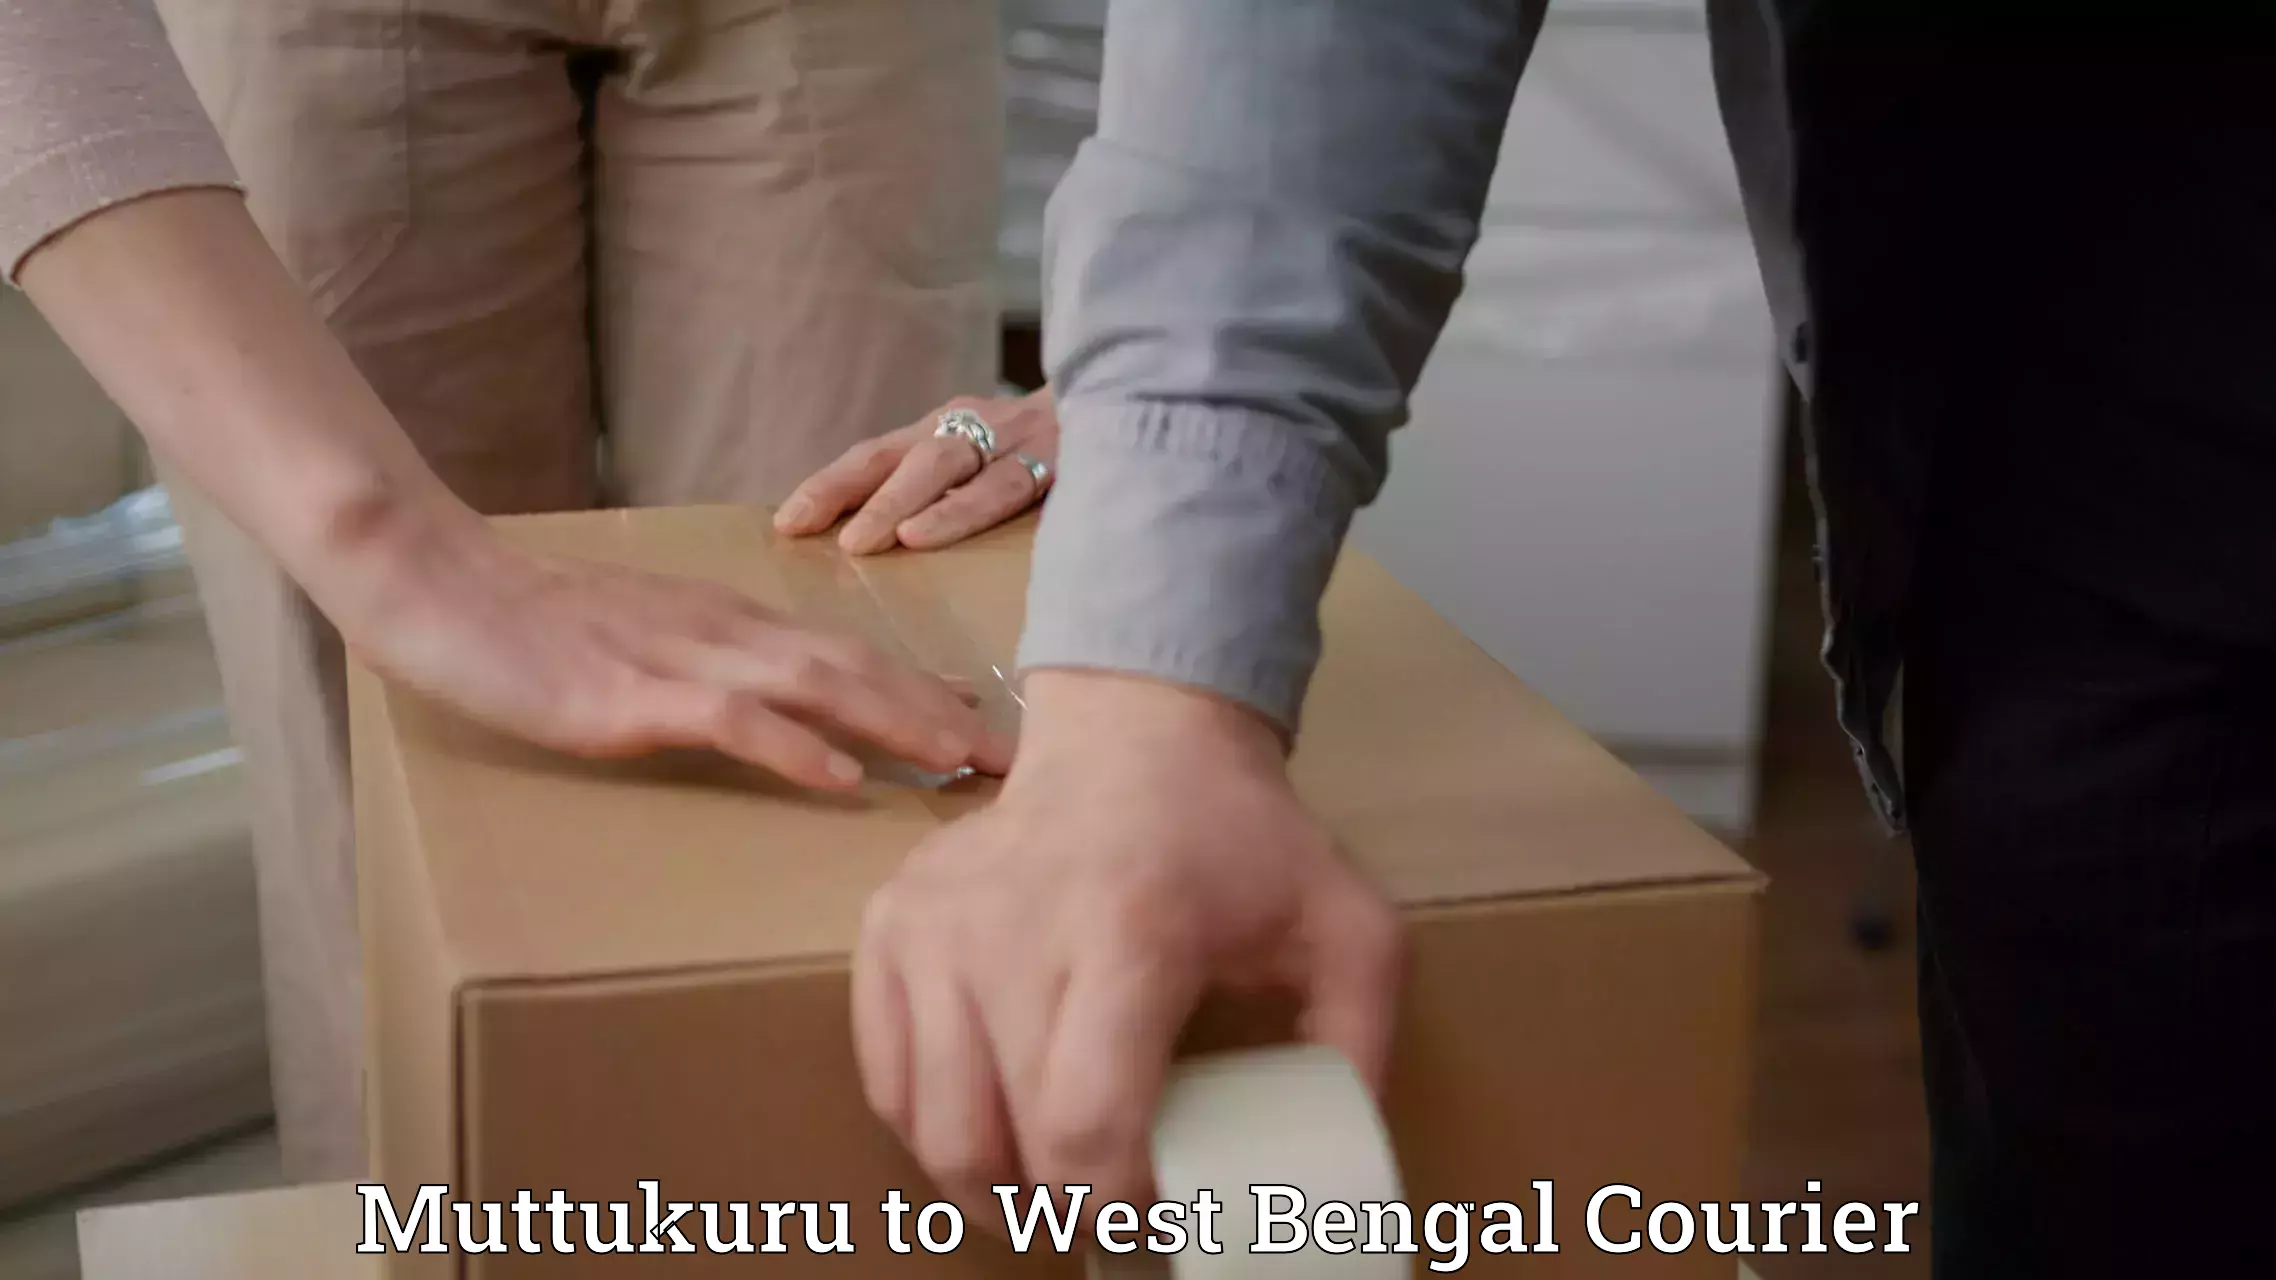 On-call courier service Muttukuru to Mirzapur Bardhaman